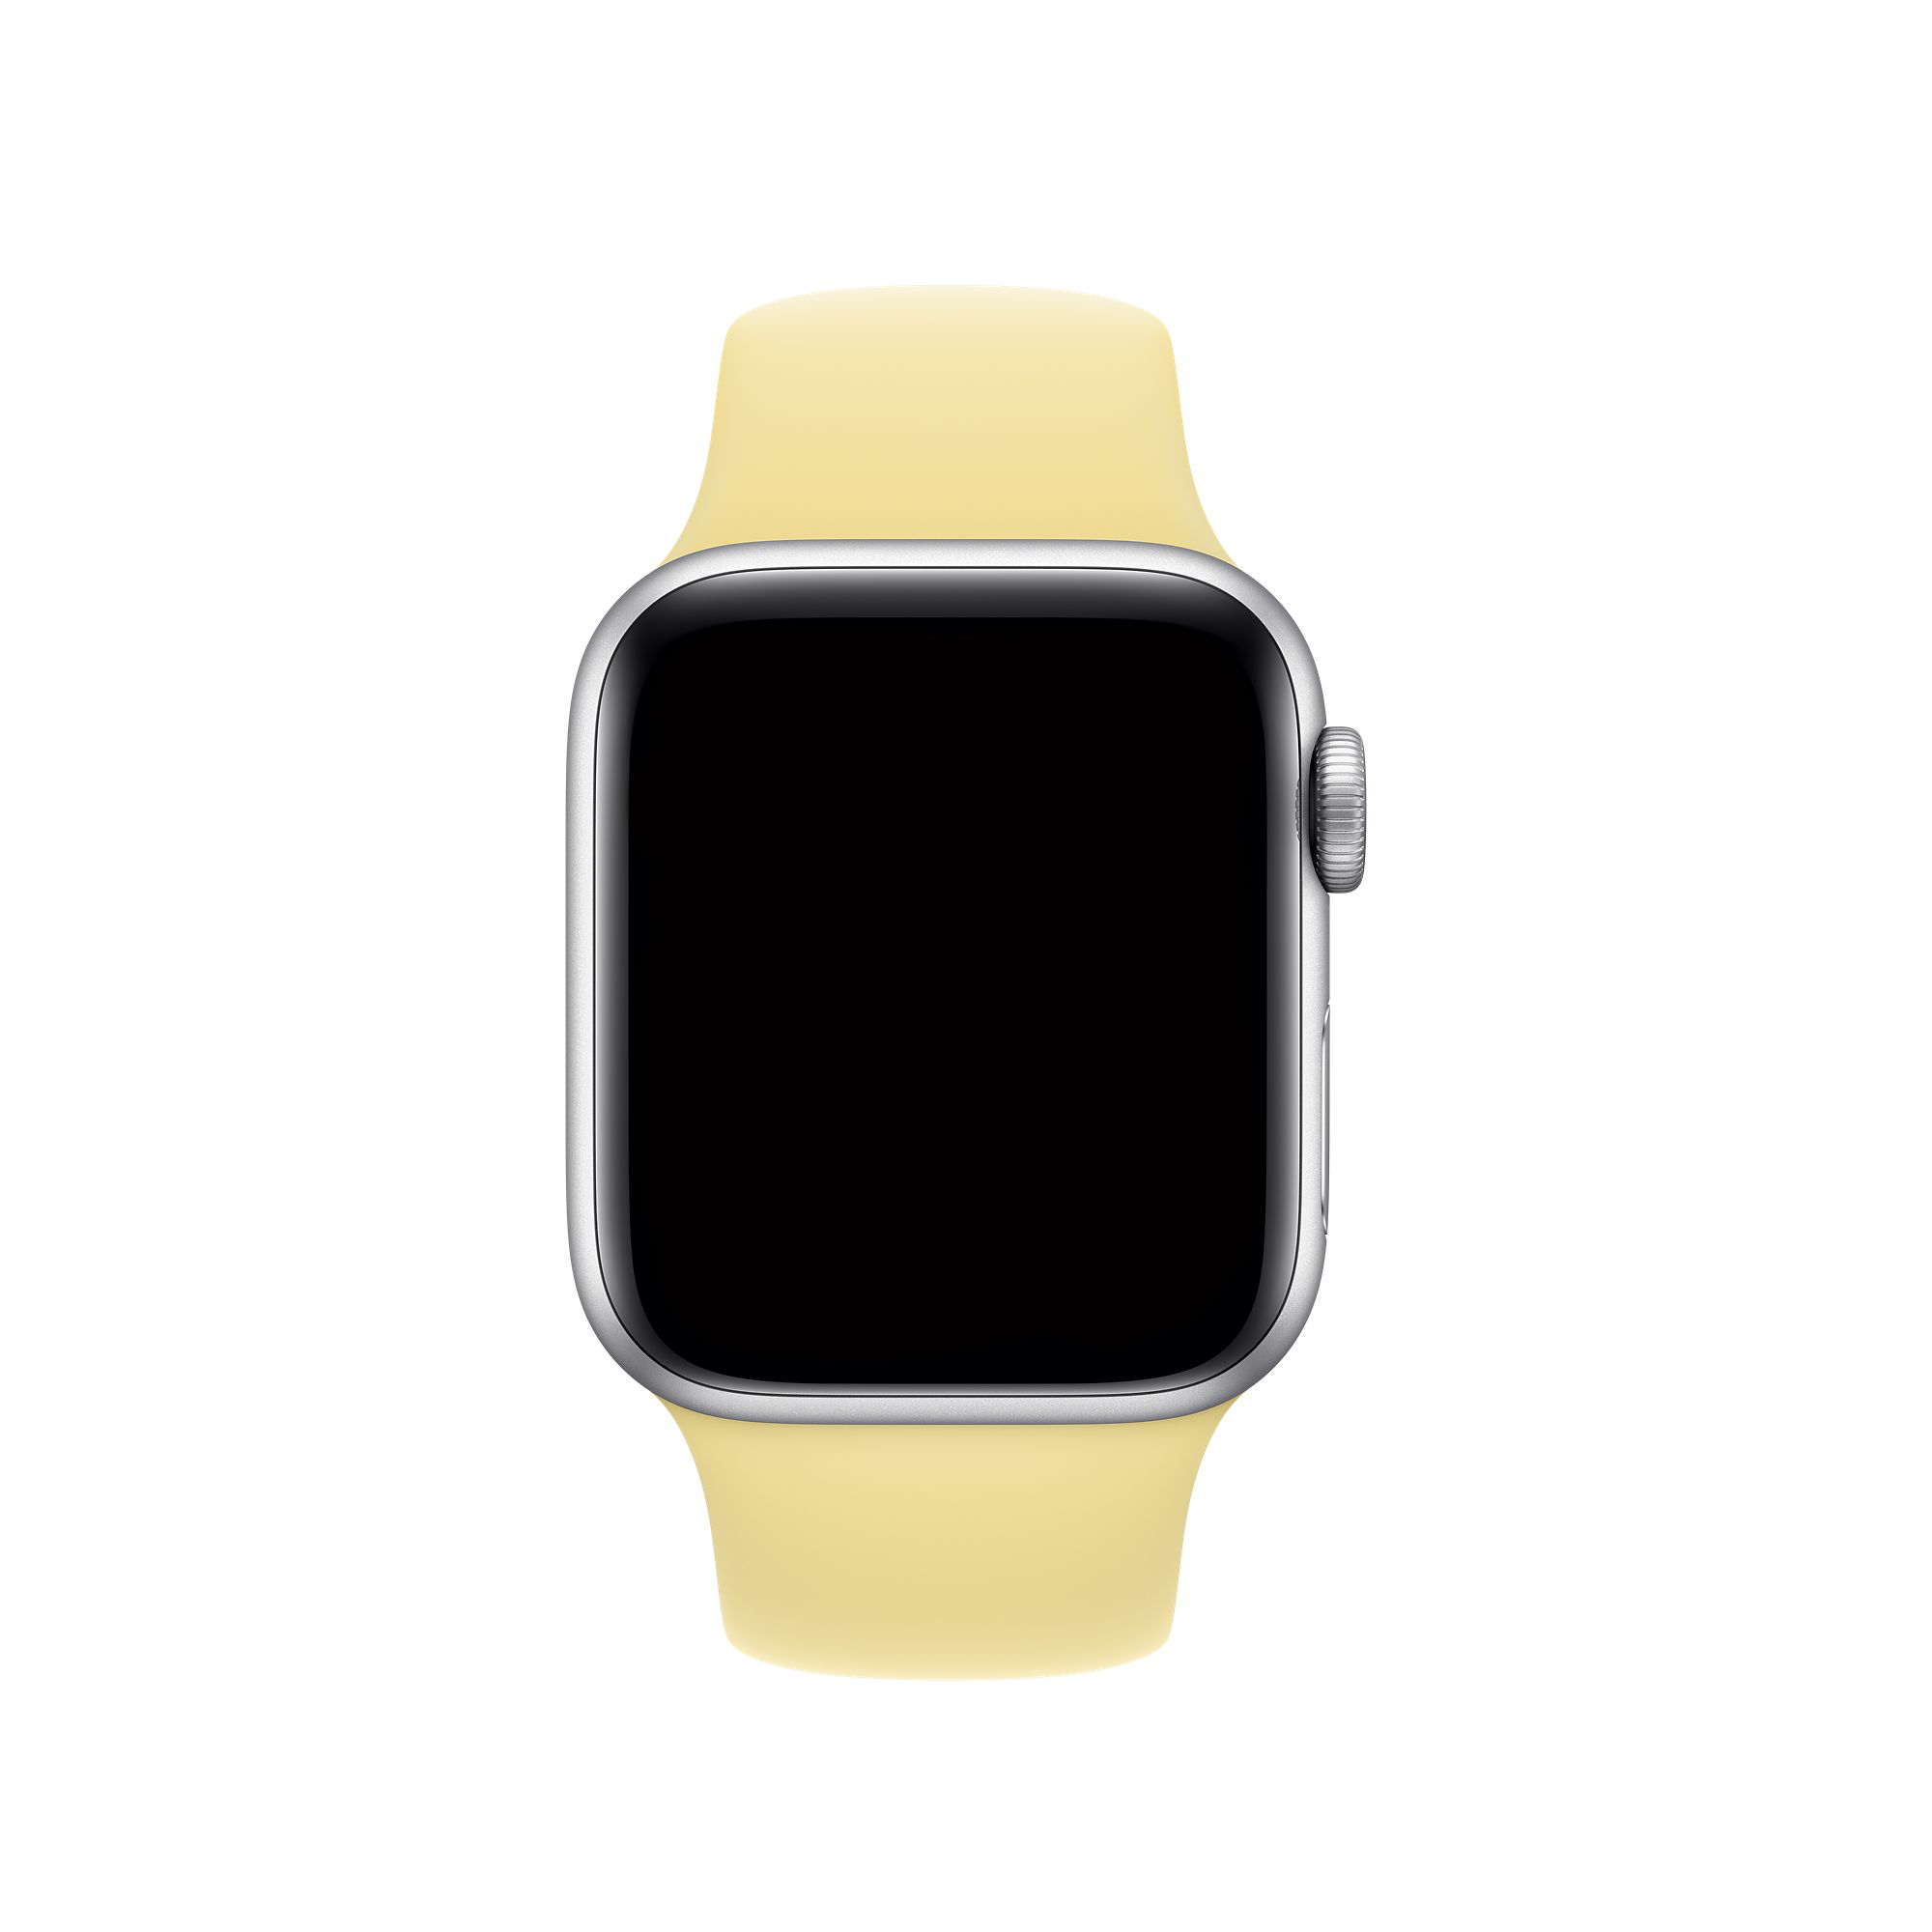  Apple Watch sport szalag - citromkrém